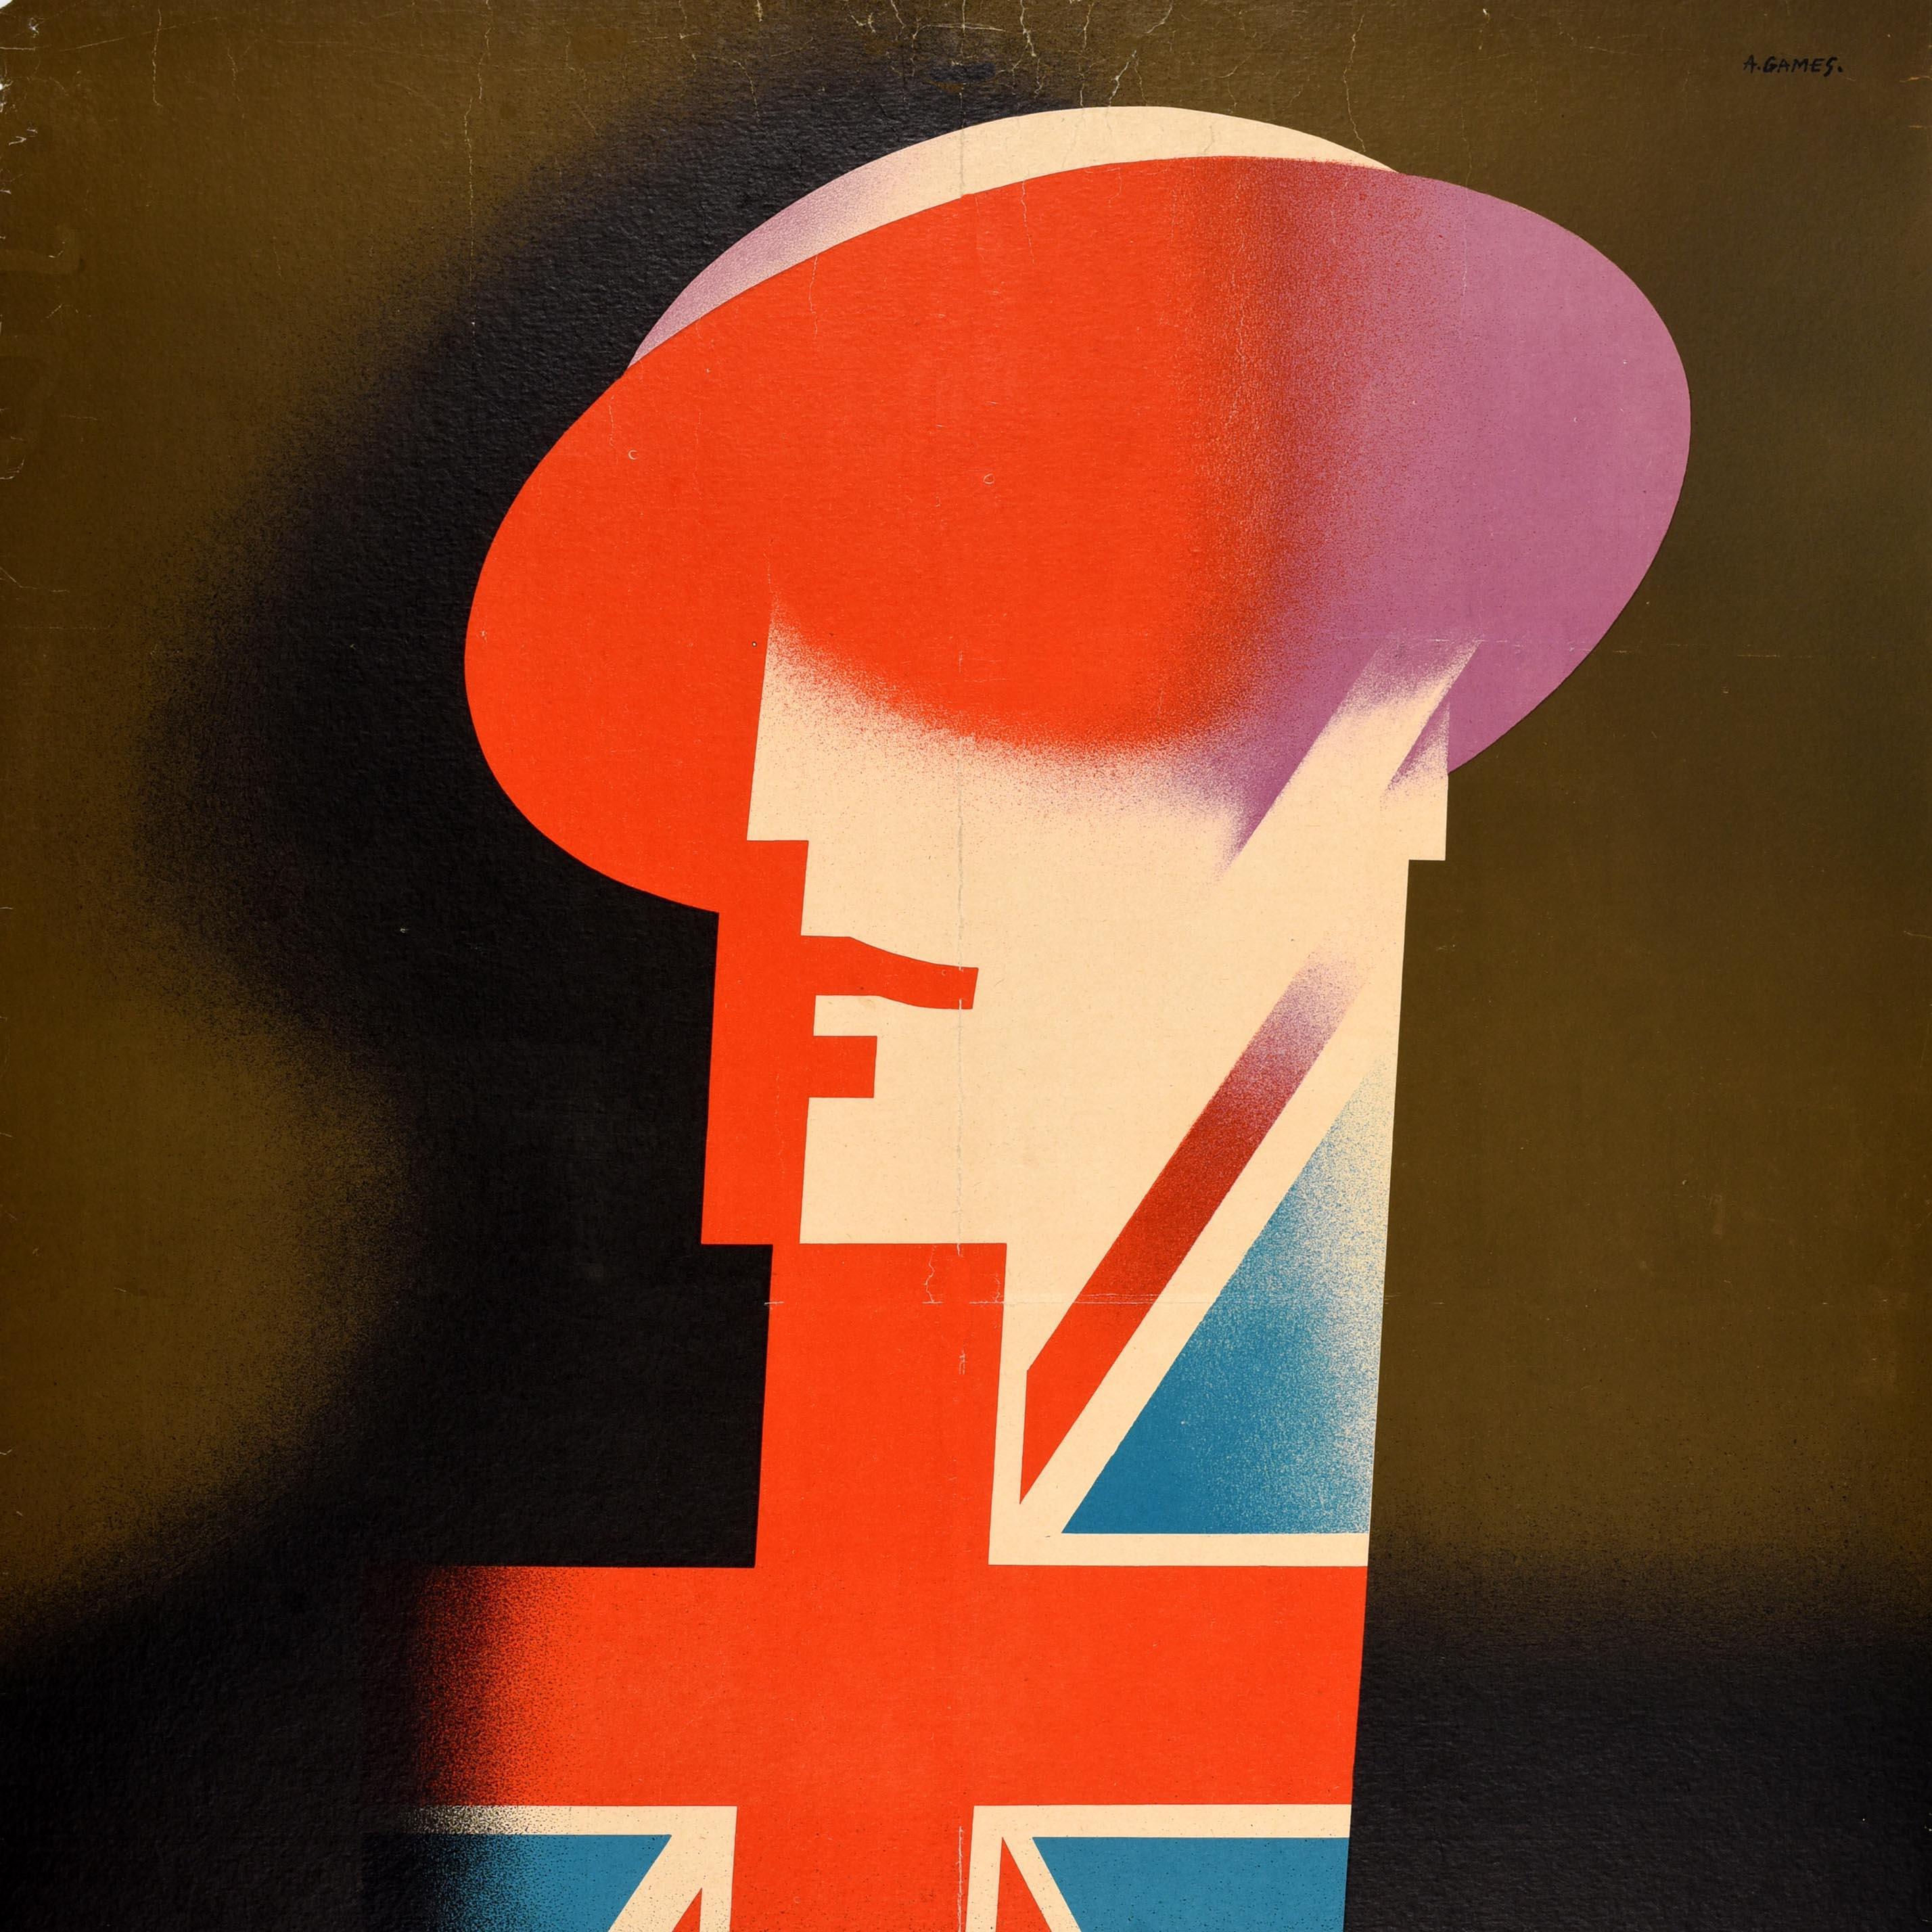 Original Vintage Advertising Poster British Army Exhibition Abram Games Soldier For Sale 1